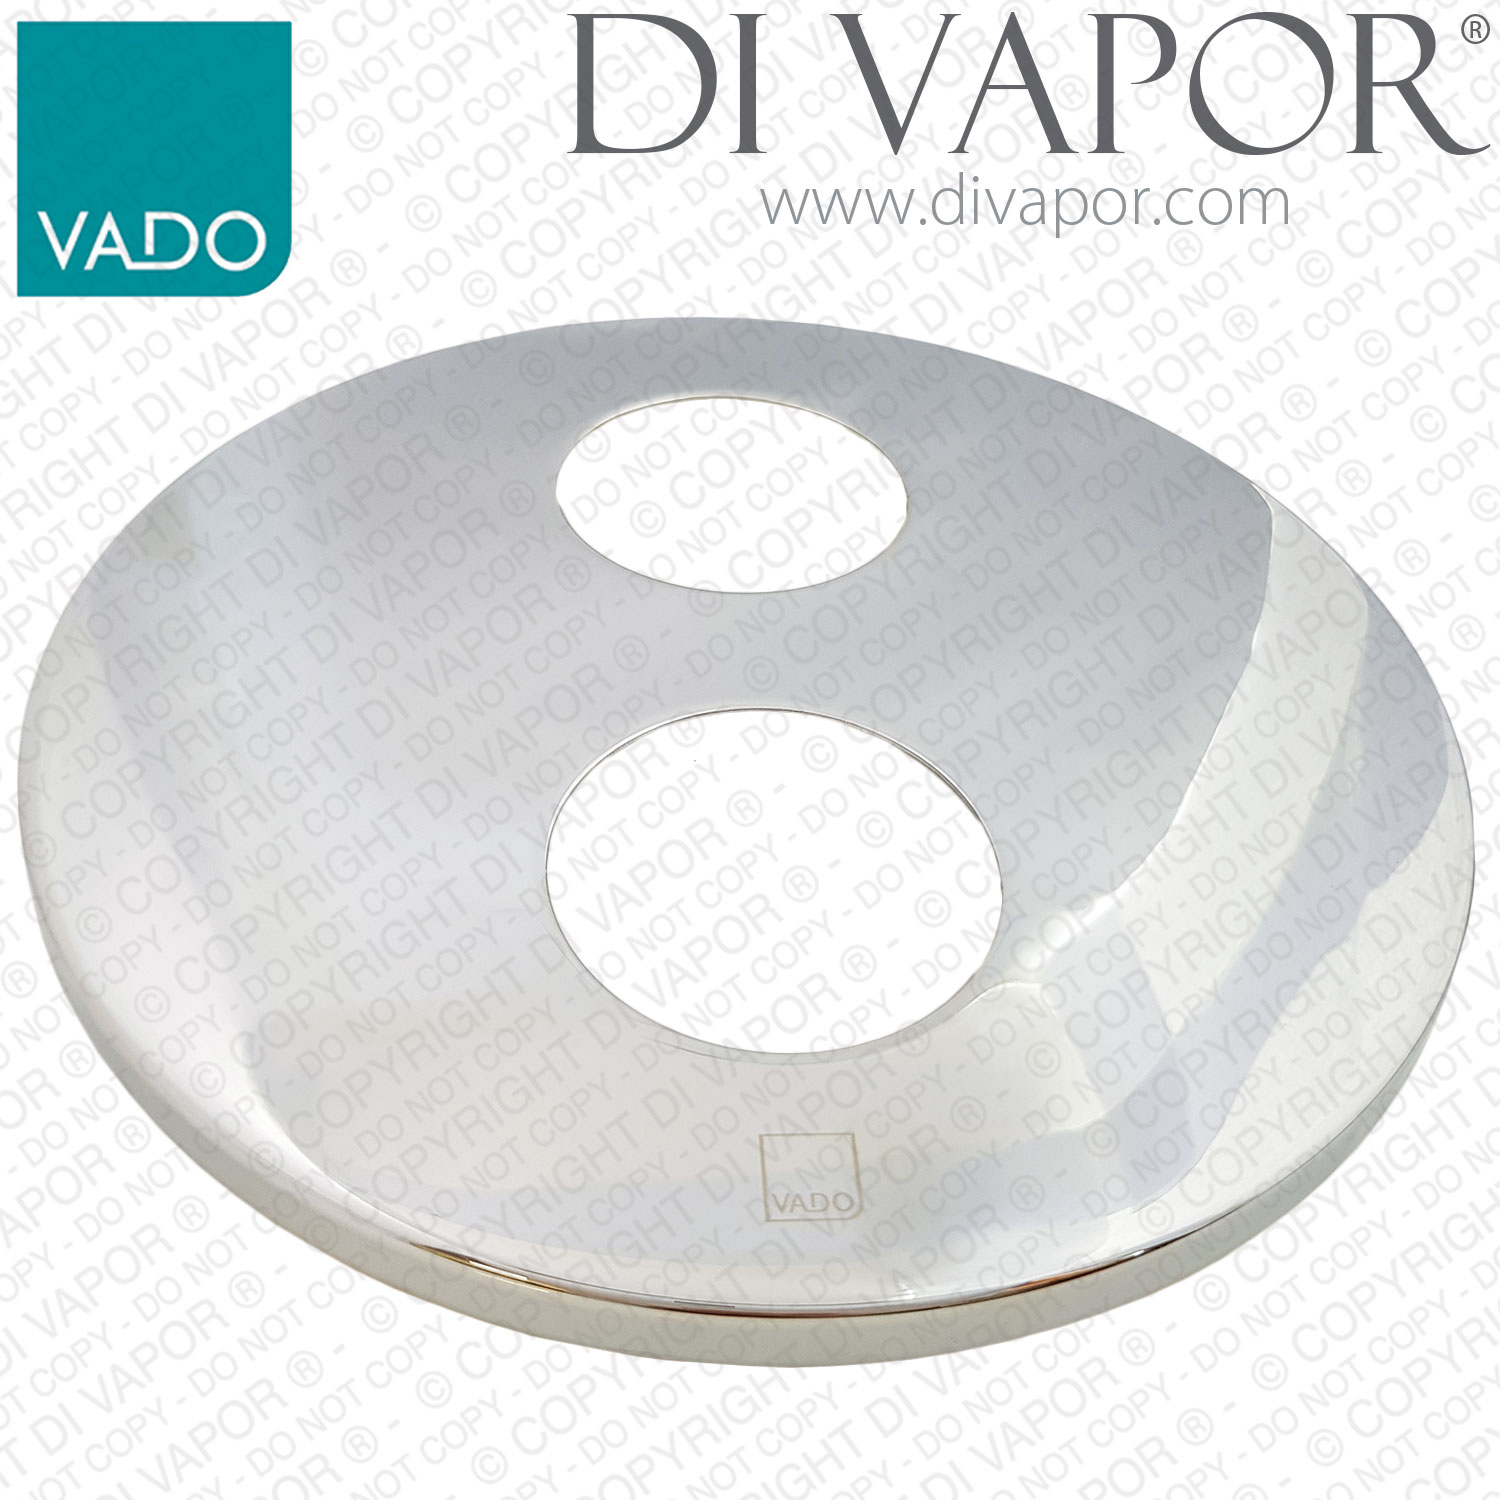 Vado CEL-0010/RO-C/P Shower Valve Faceplate